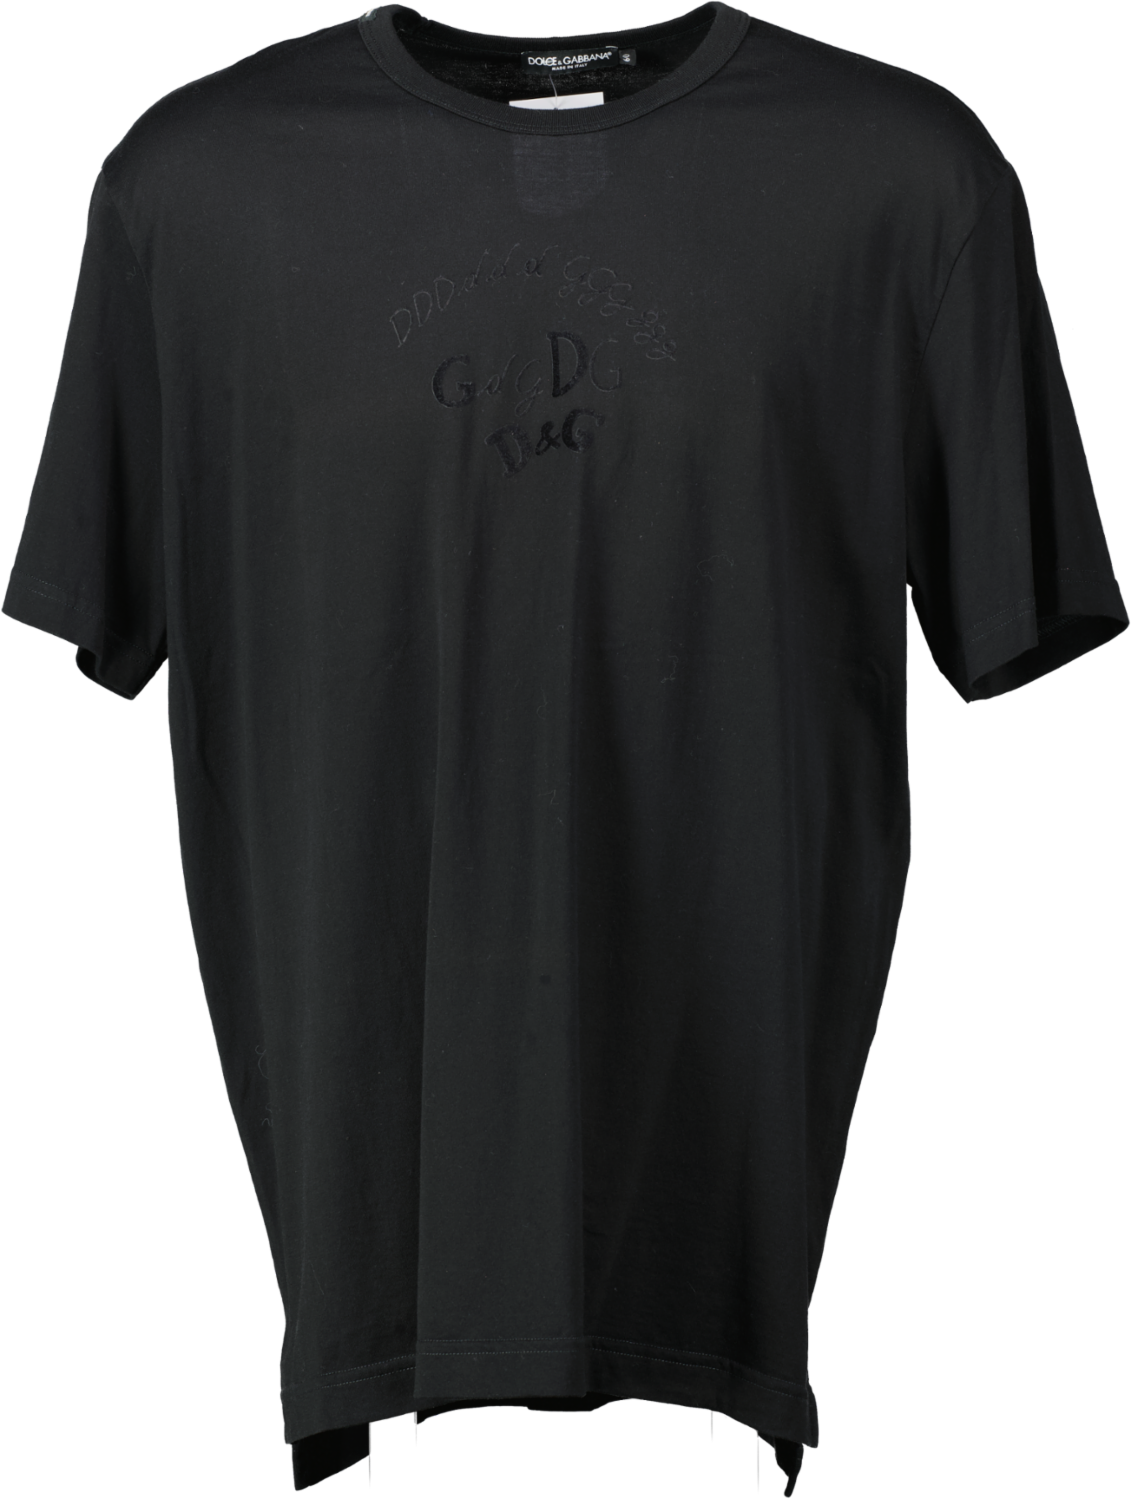 Dolce & Gabbana Black Embroidered Logo T-shirt Sz60 UK XXL